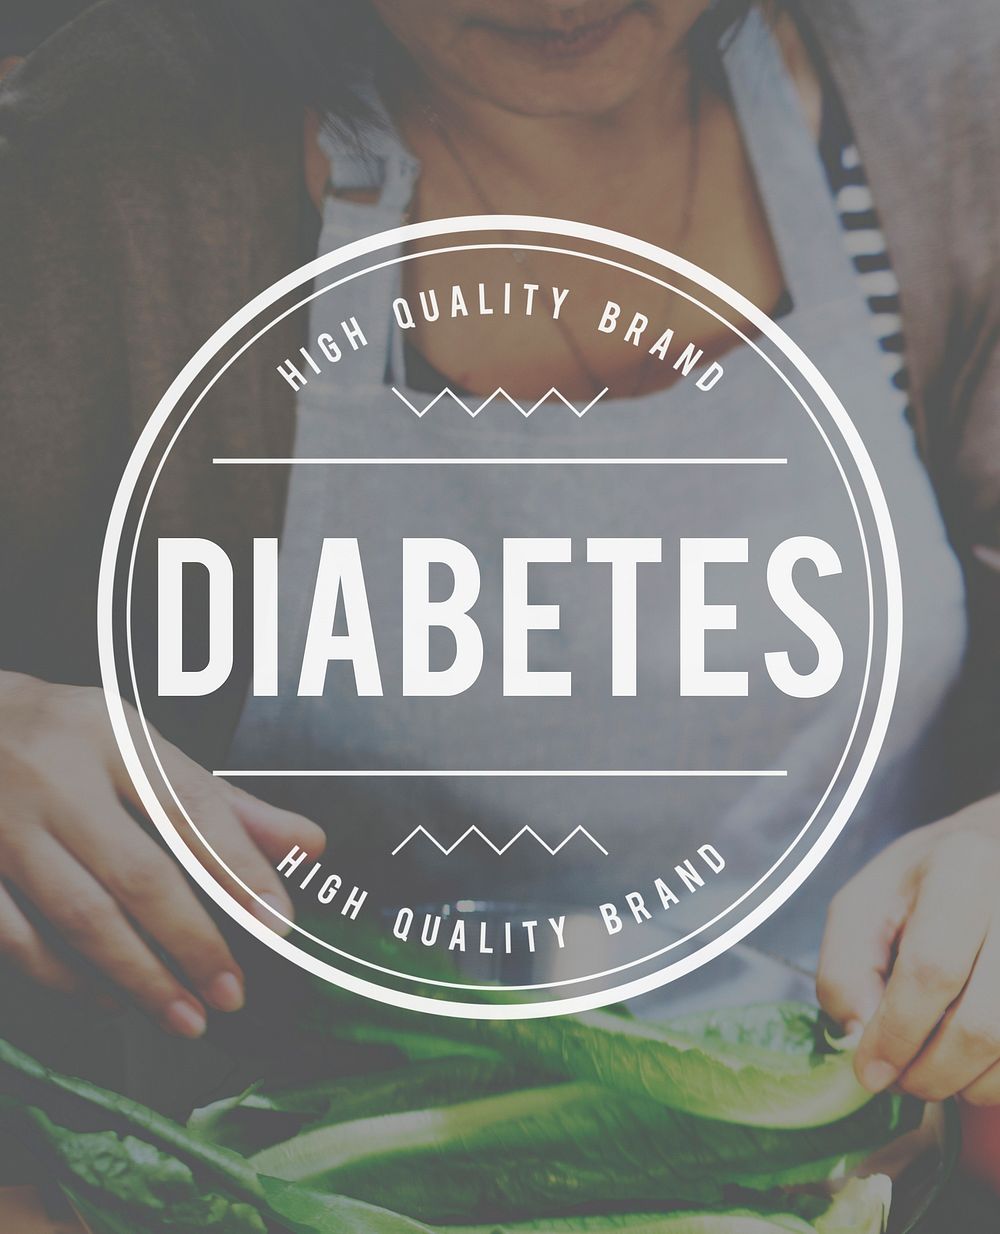 Diabetes Blood Sugar Insulin Medical Disease Concept